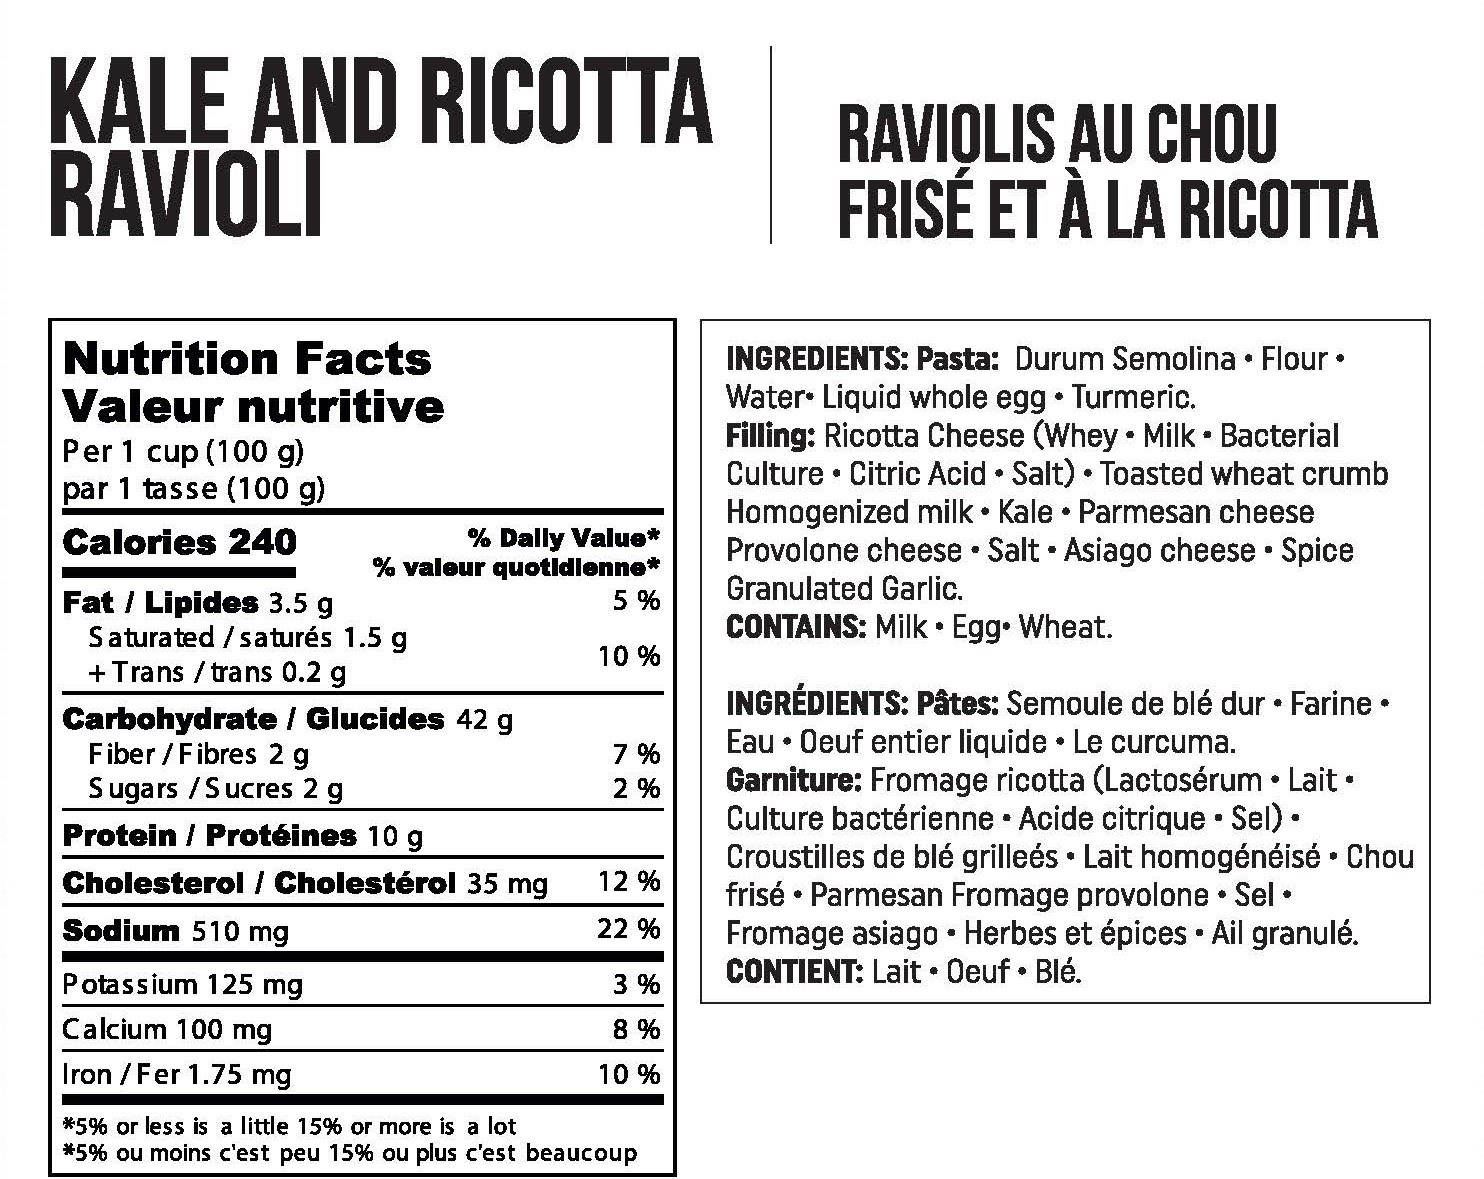 Kale and Ricotta Ravioli